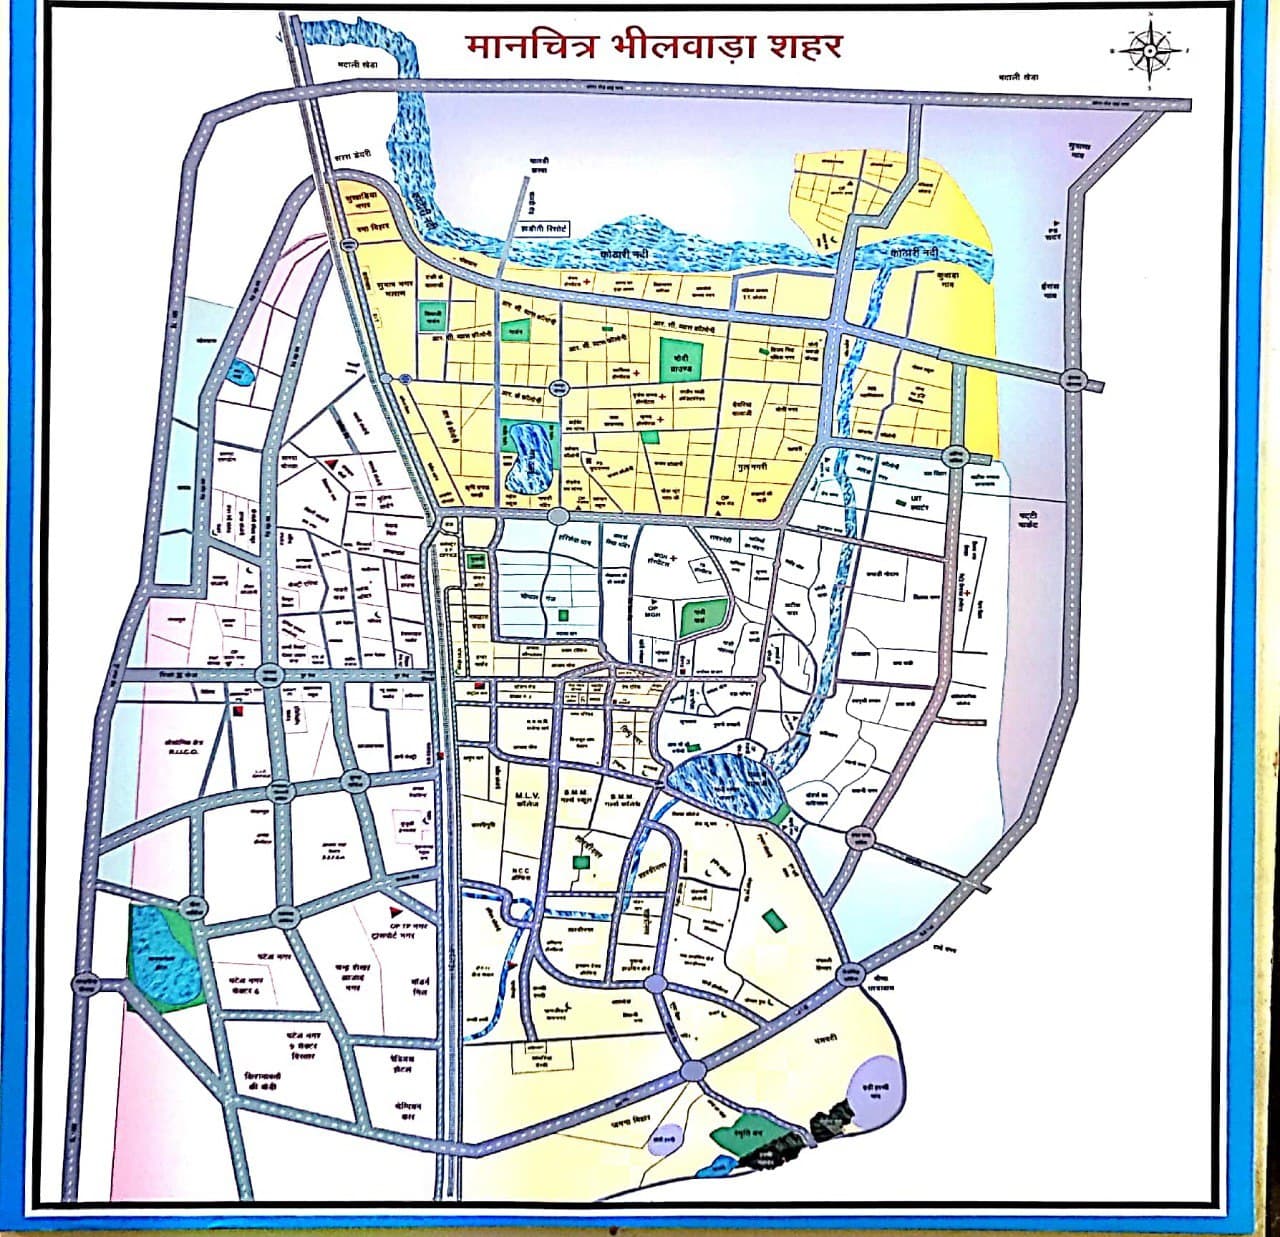 Maps made of three zones in Bhilwara UIT